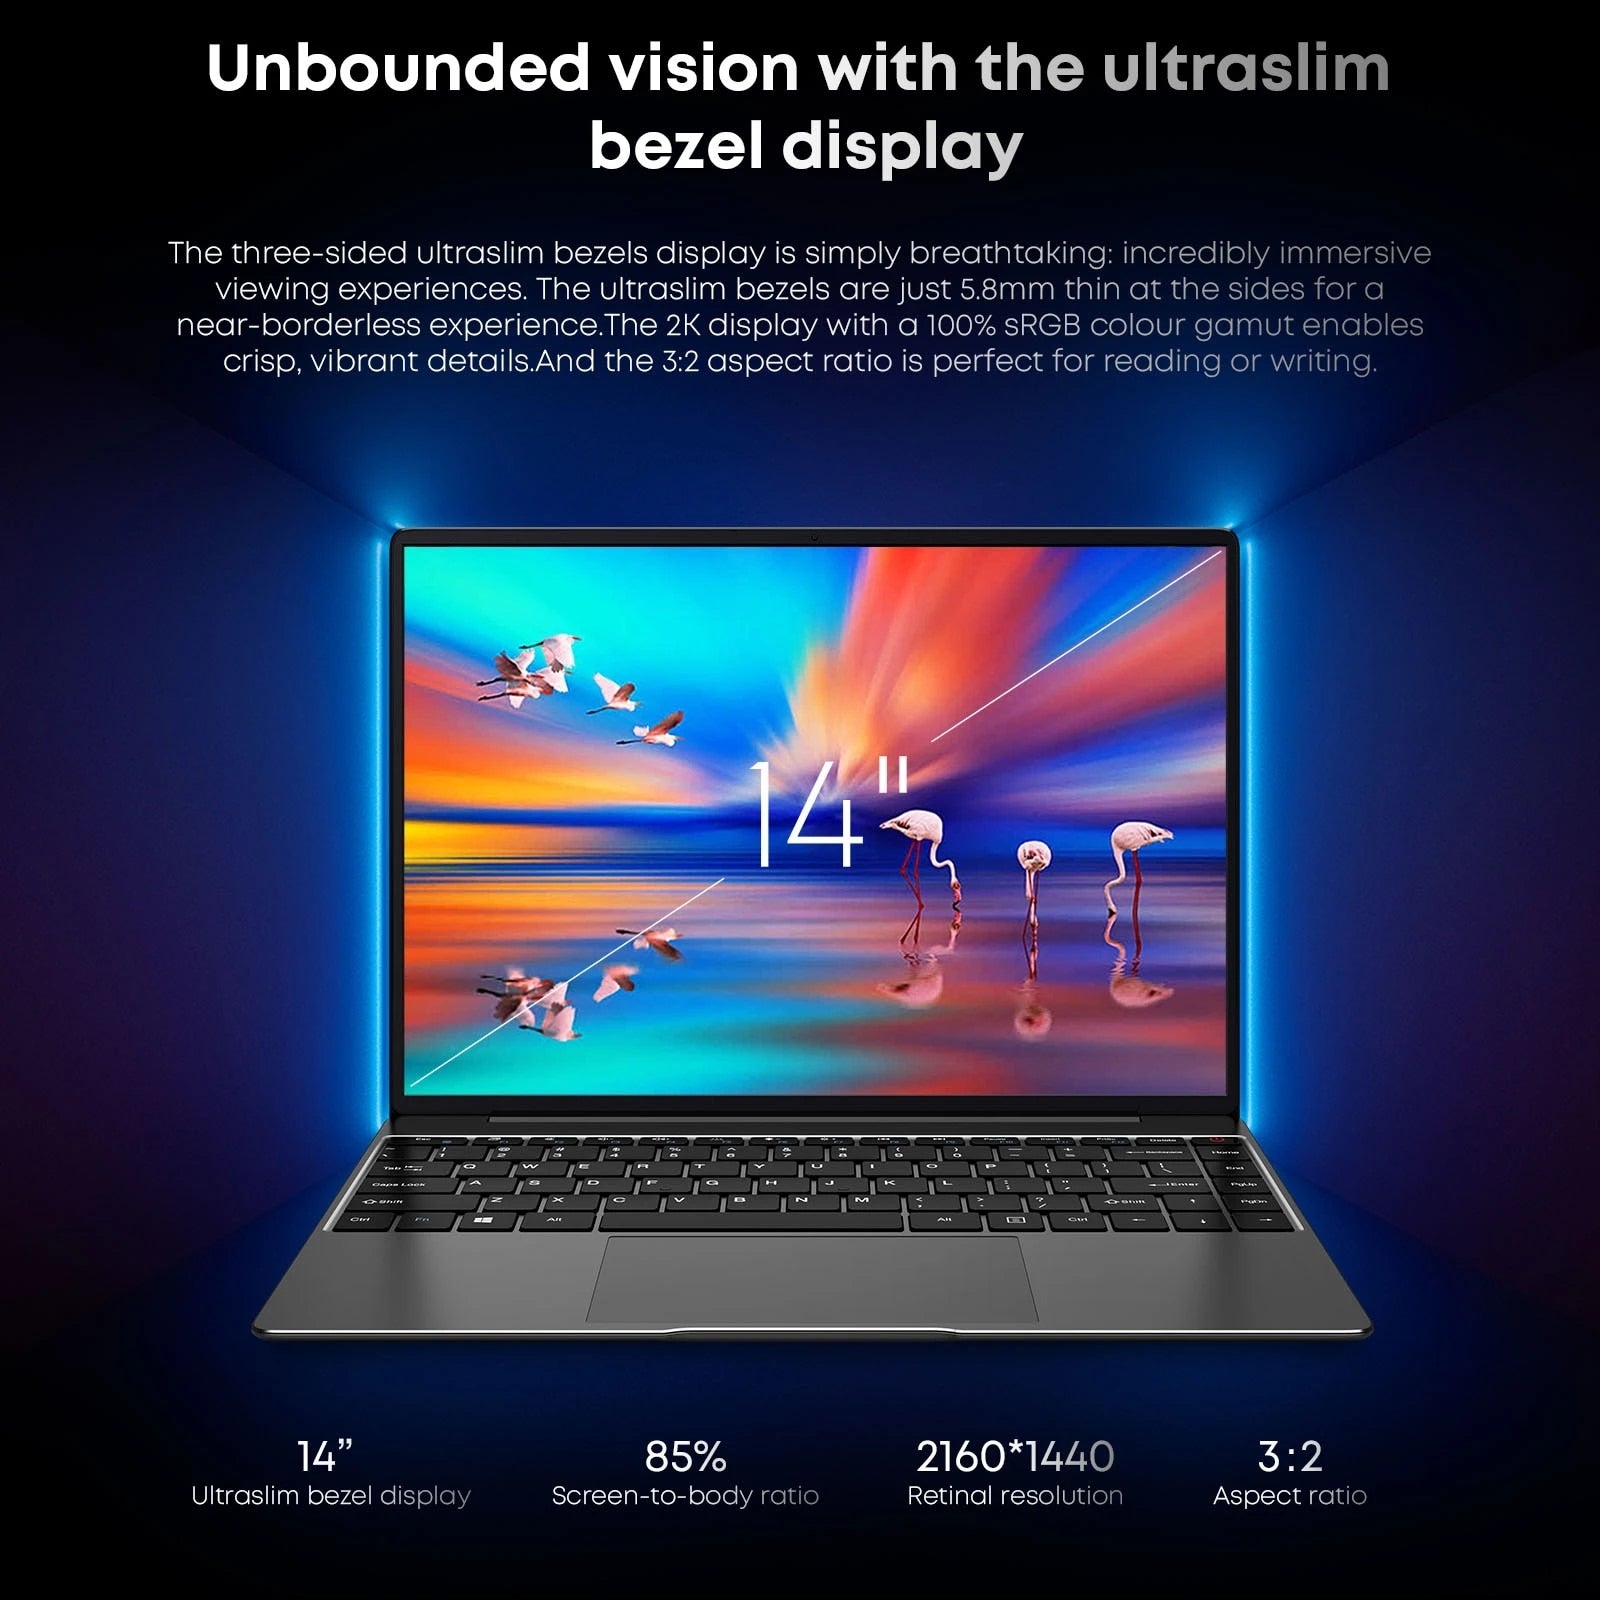 CHUWI CoreBook X Gaming Laptop 14.1 inch FHD IPS Screen 16GB RAM 512GB SSD Intel Six Cores i3-1215U Core UP to 3.70 Ghz Notebook